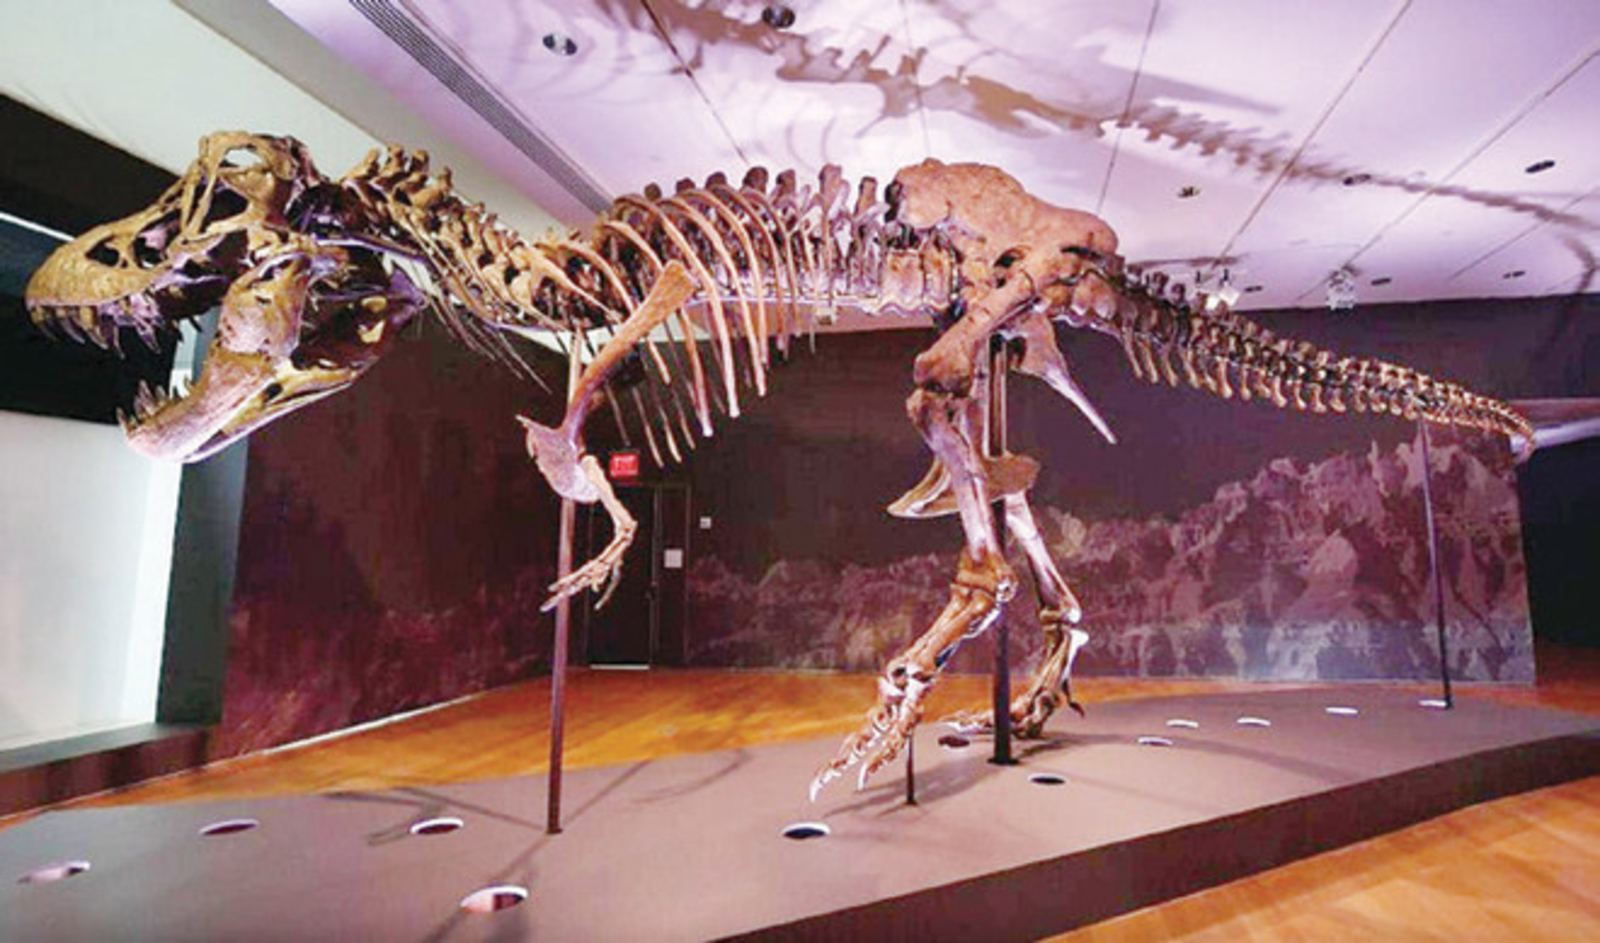 عرض هيكل لديناصور عمره 76 مليون عام للبيع 